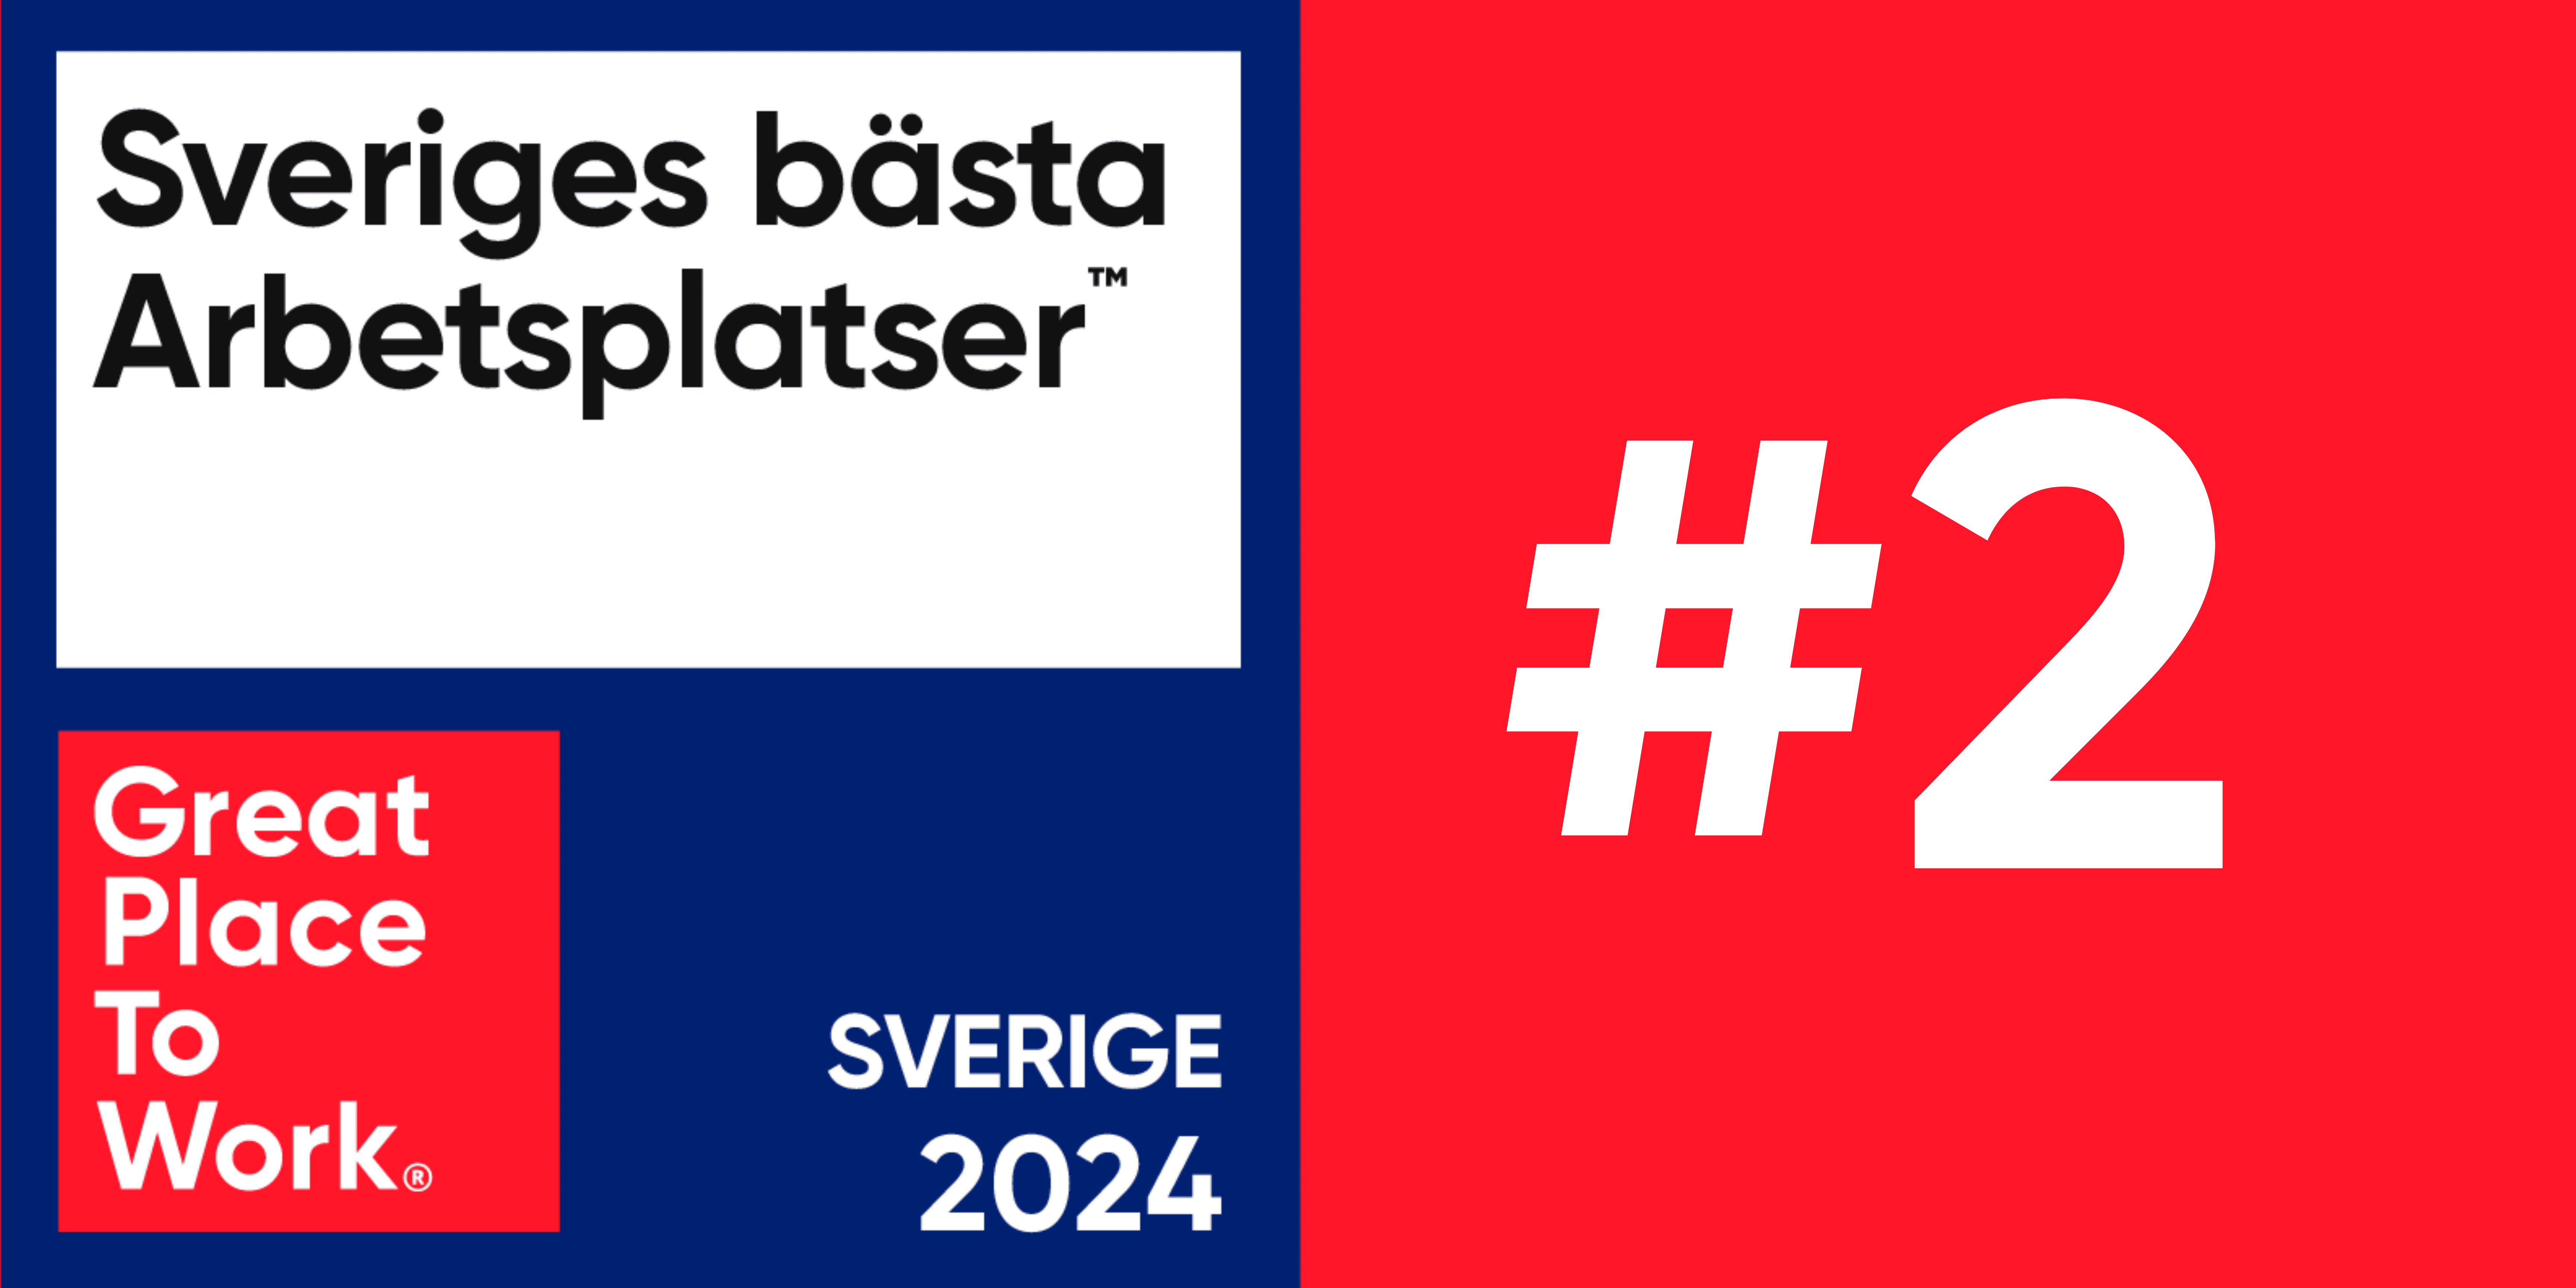 Sveriges bästa arbetsplats, Great place to work 2024